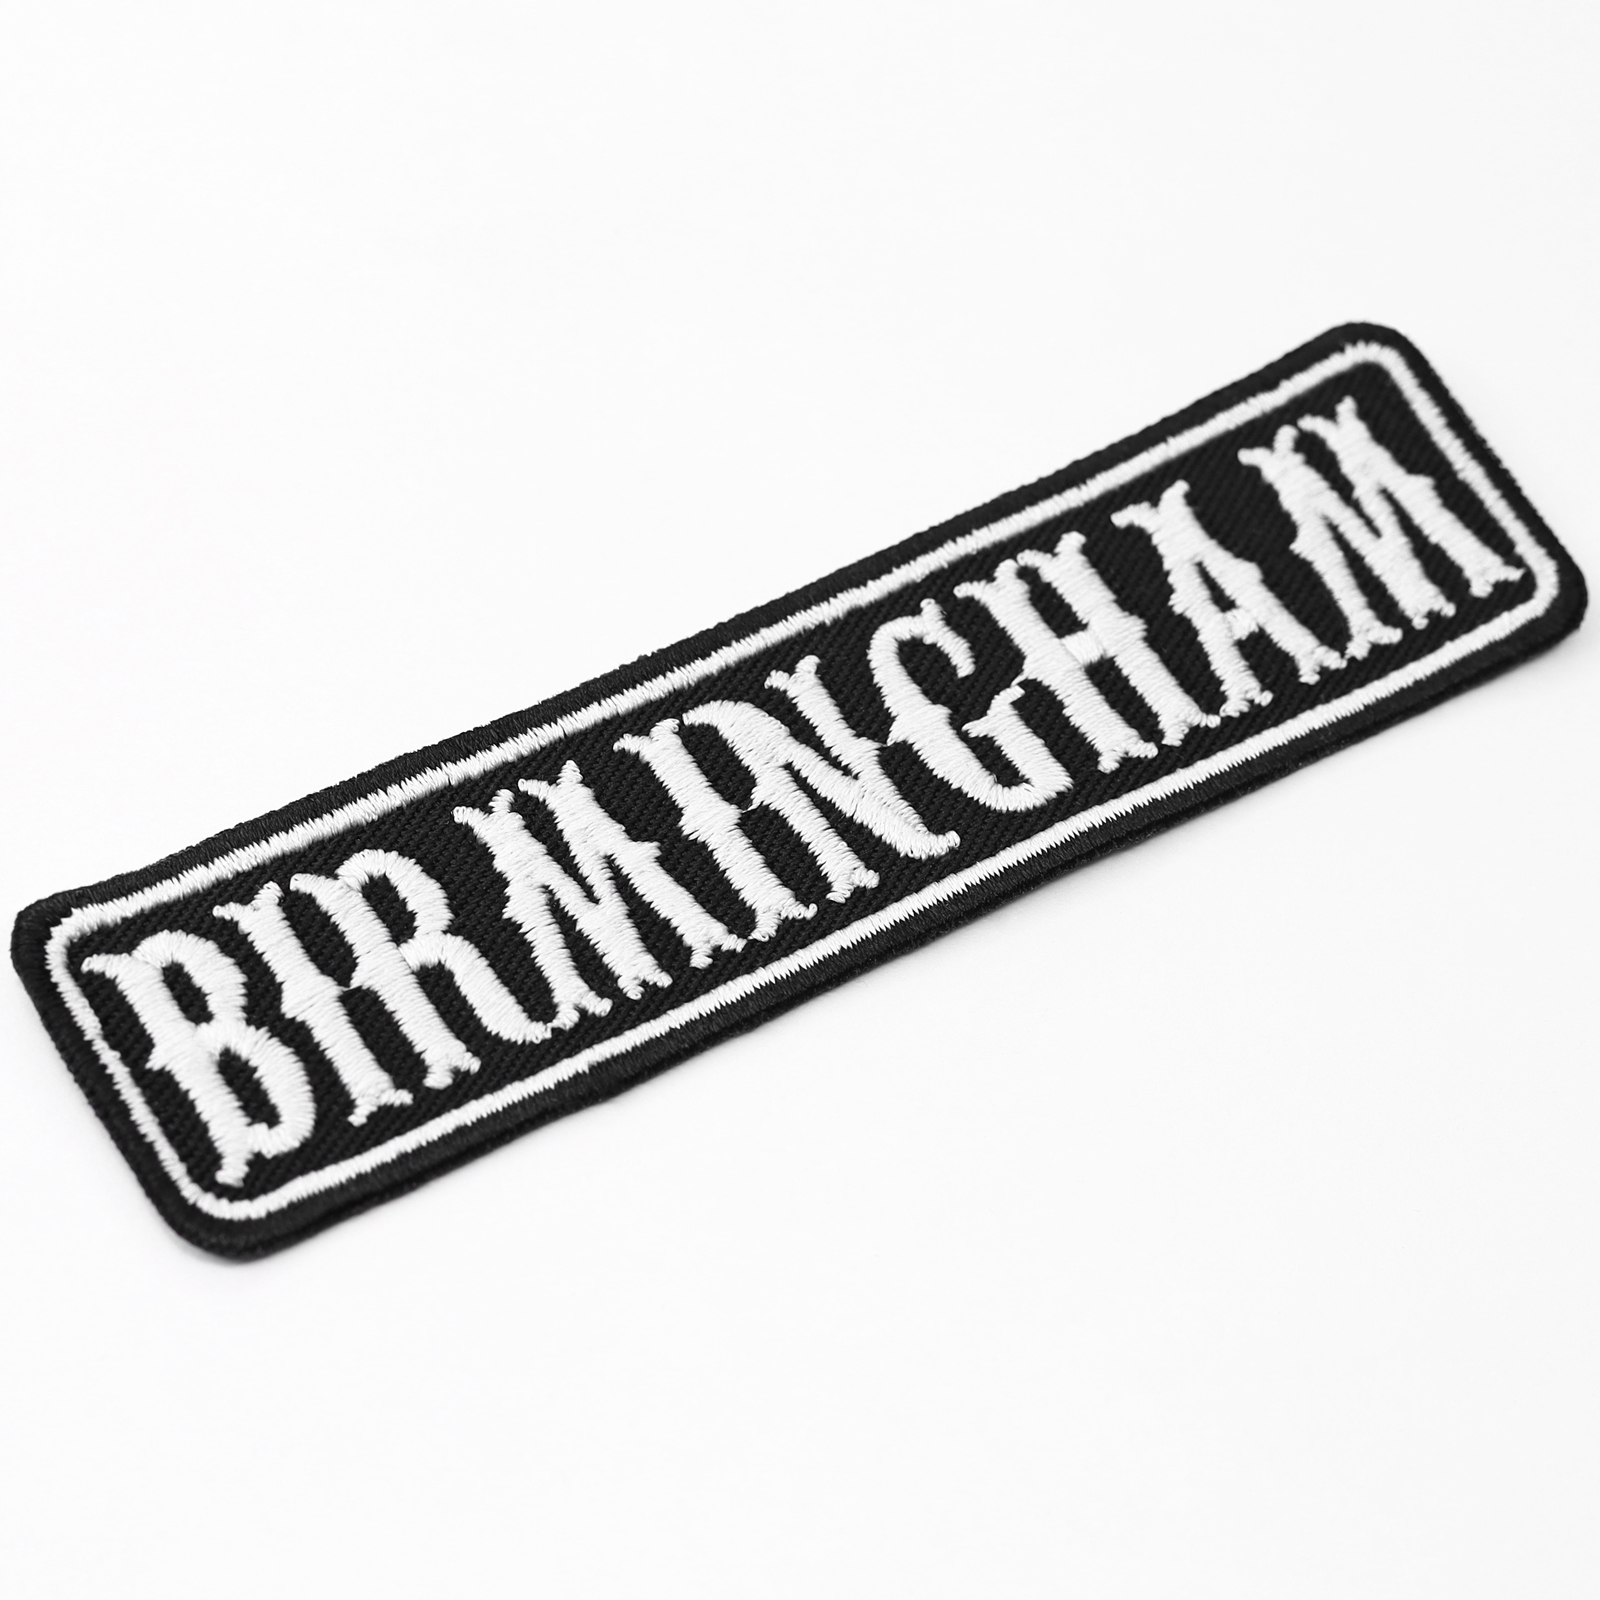 Birmingham - Patch